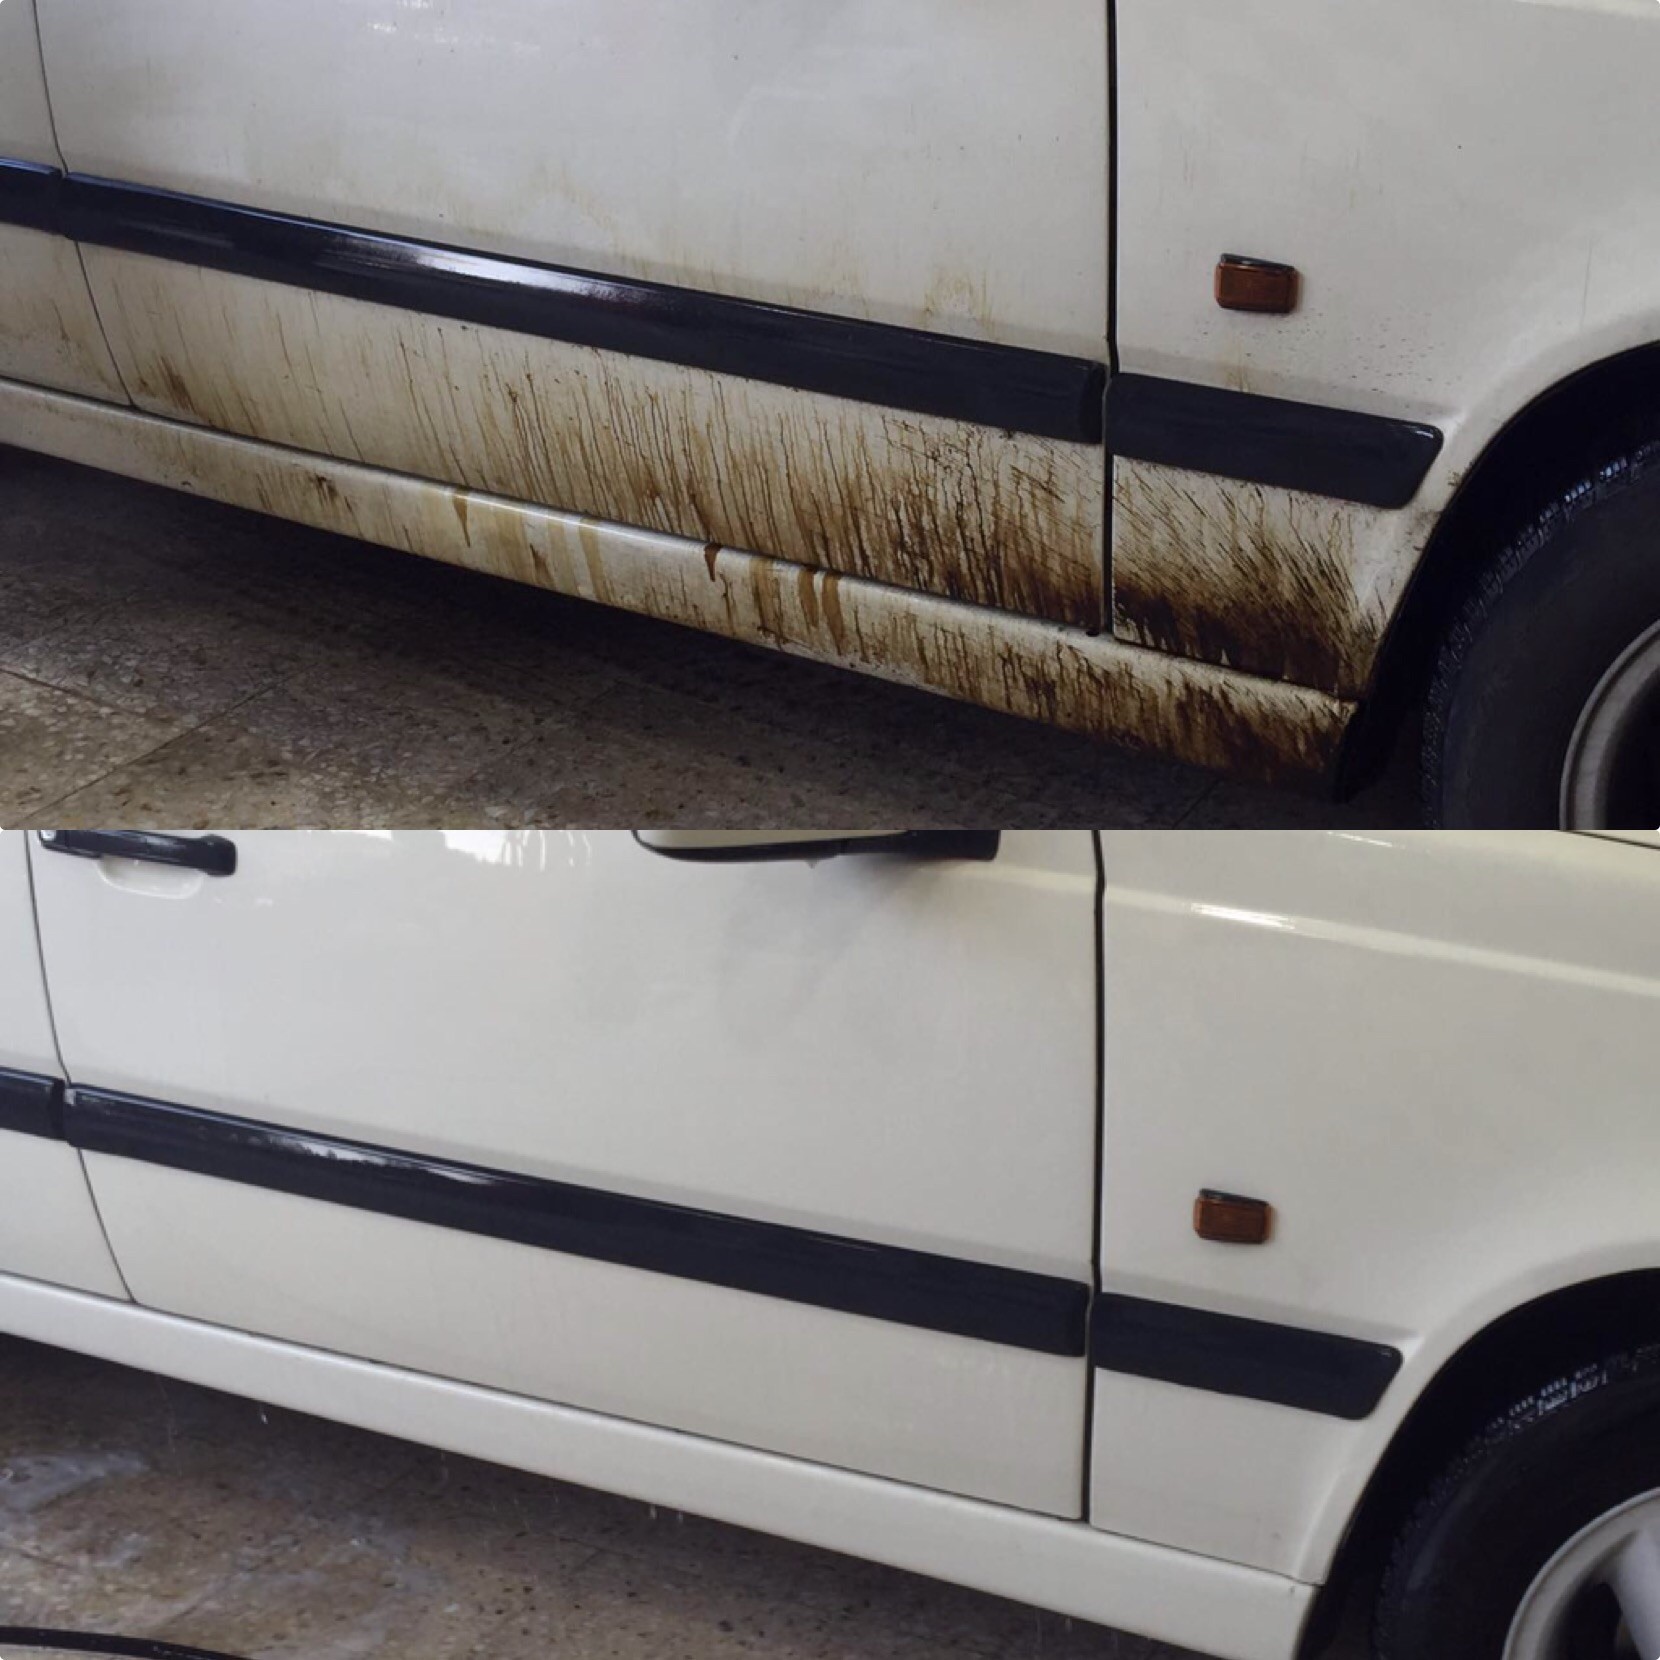  DG Car Wash Yenilendi! Ankara Boya Koruma Kampanyası 160 TL